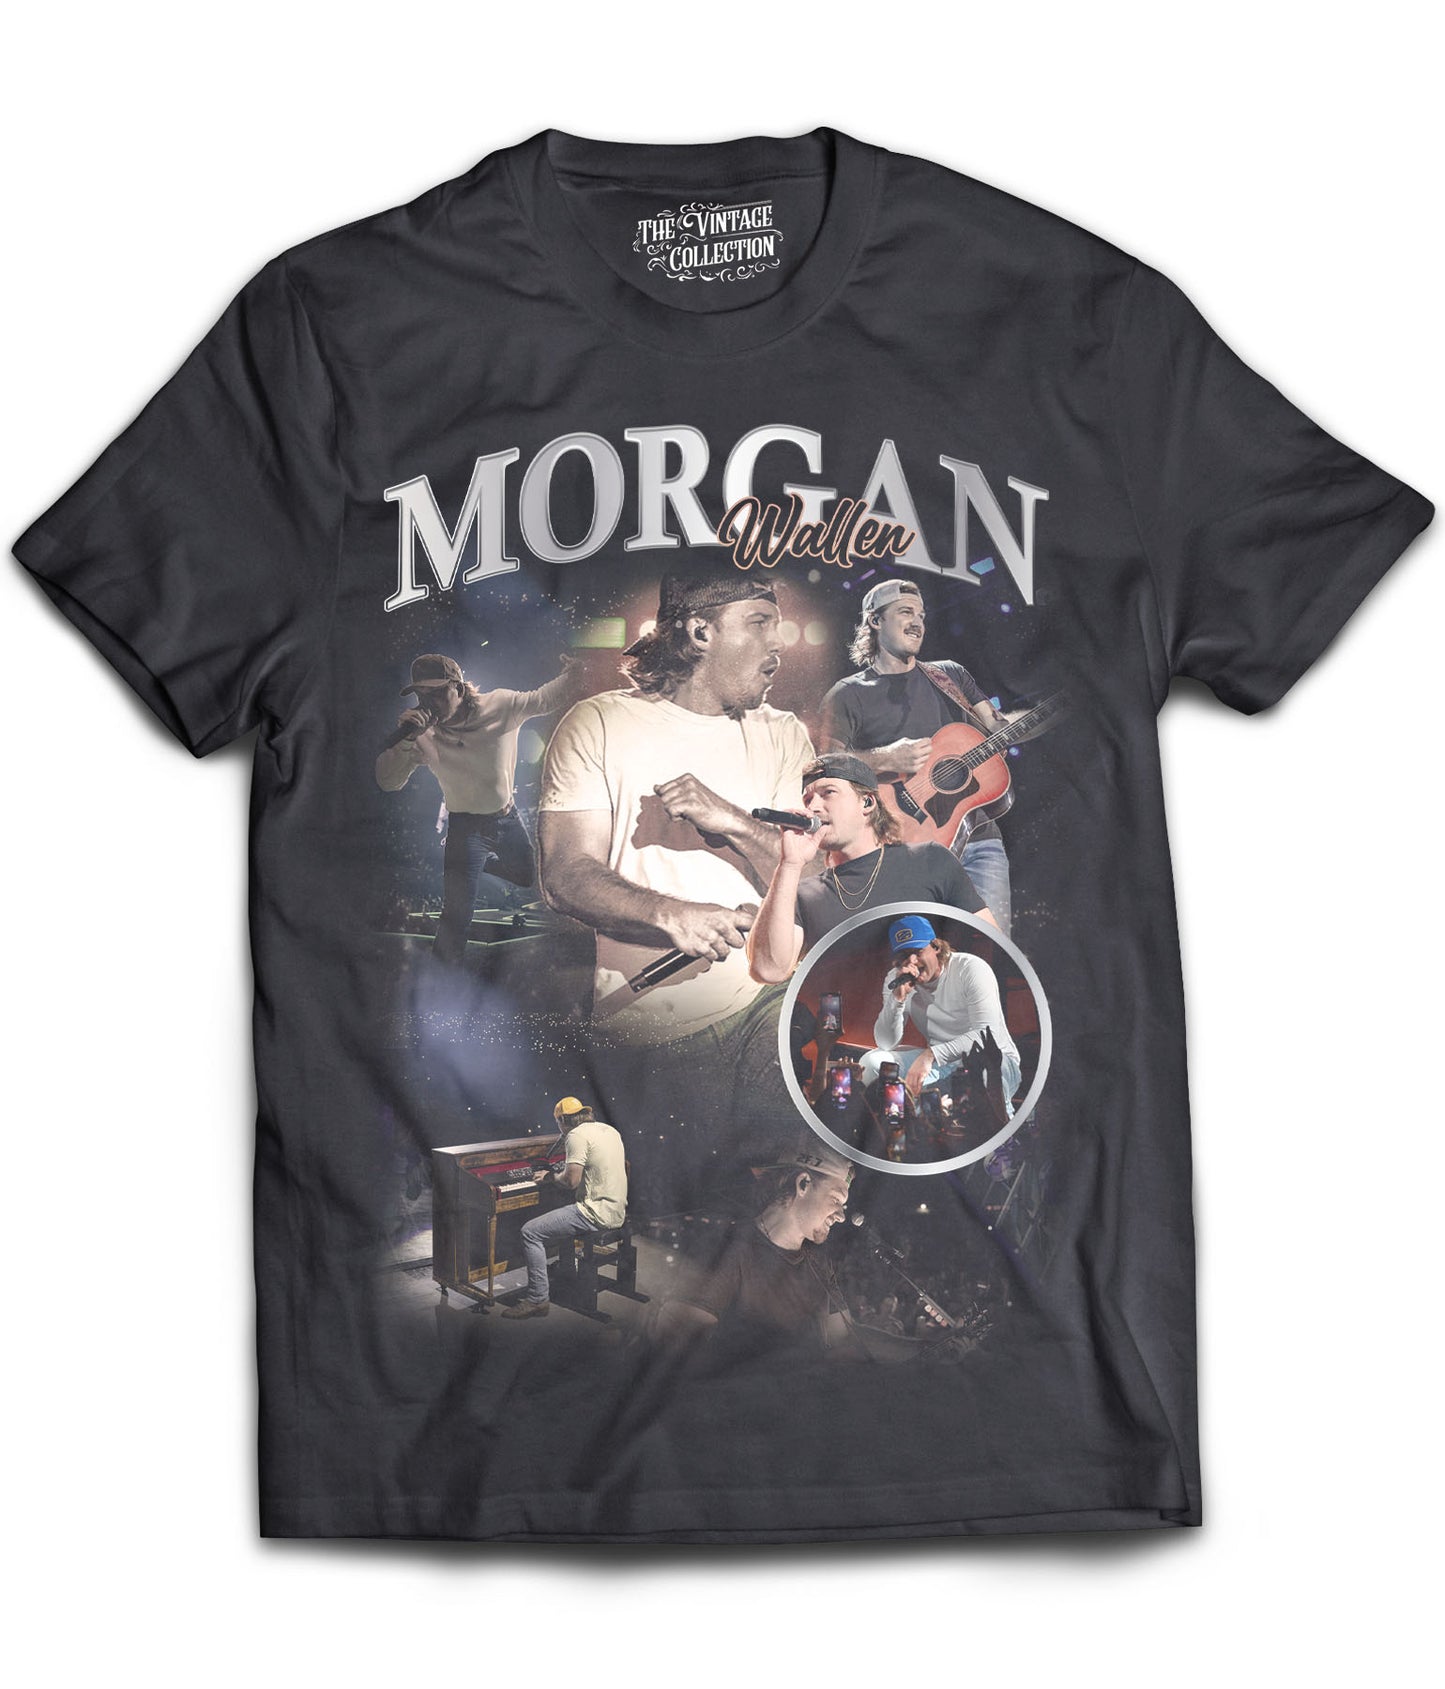 Morgan Wallen Tribute Shirt (Black)